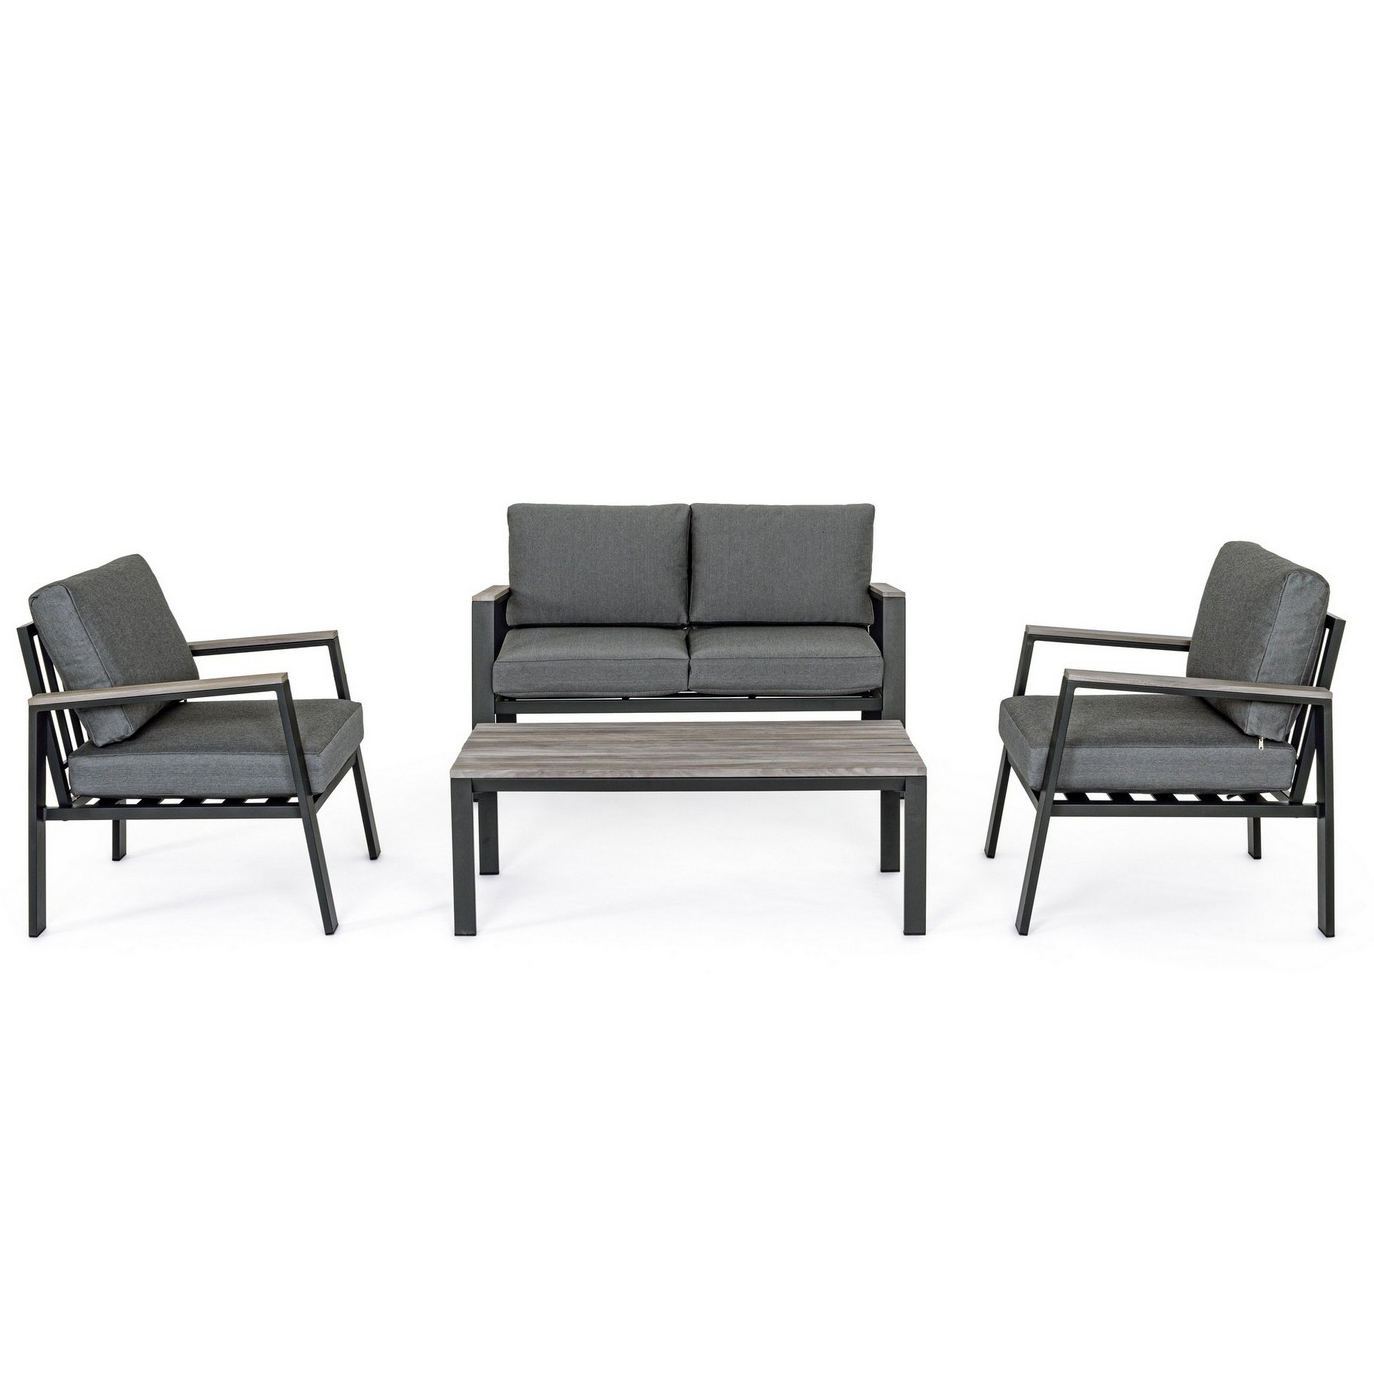 Комплект мебели Bizzotto Belmar 4 предмета, цвет серый, размер 132х75х84 см - фото 4